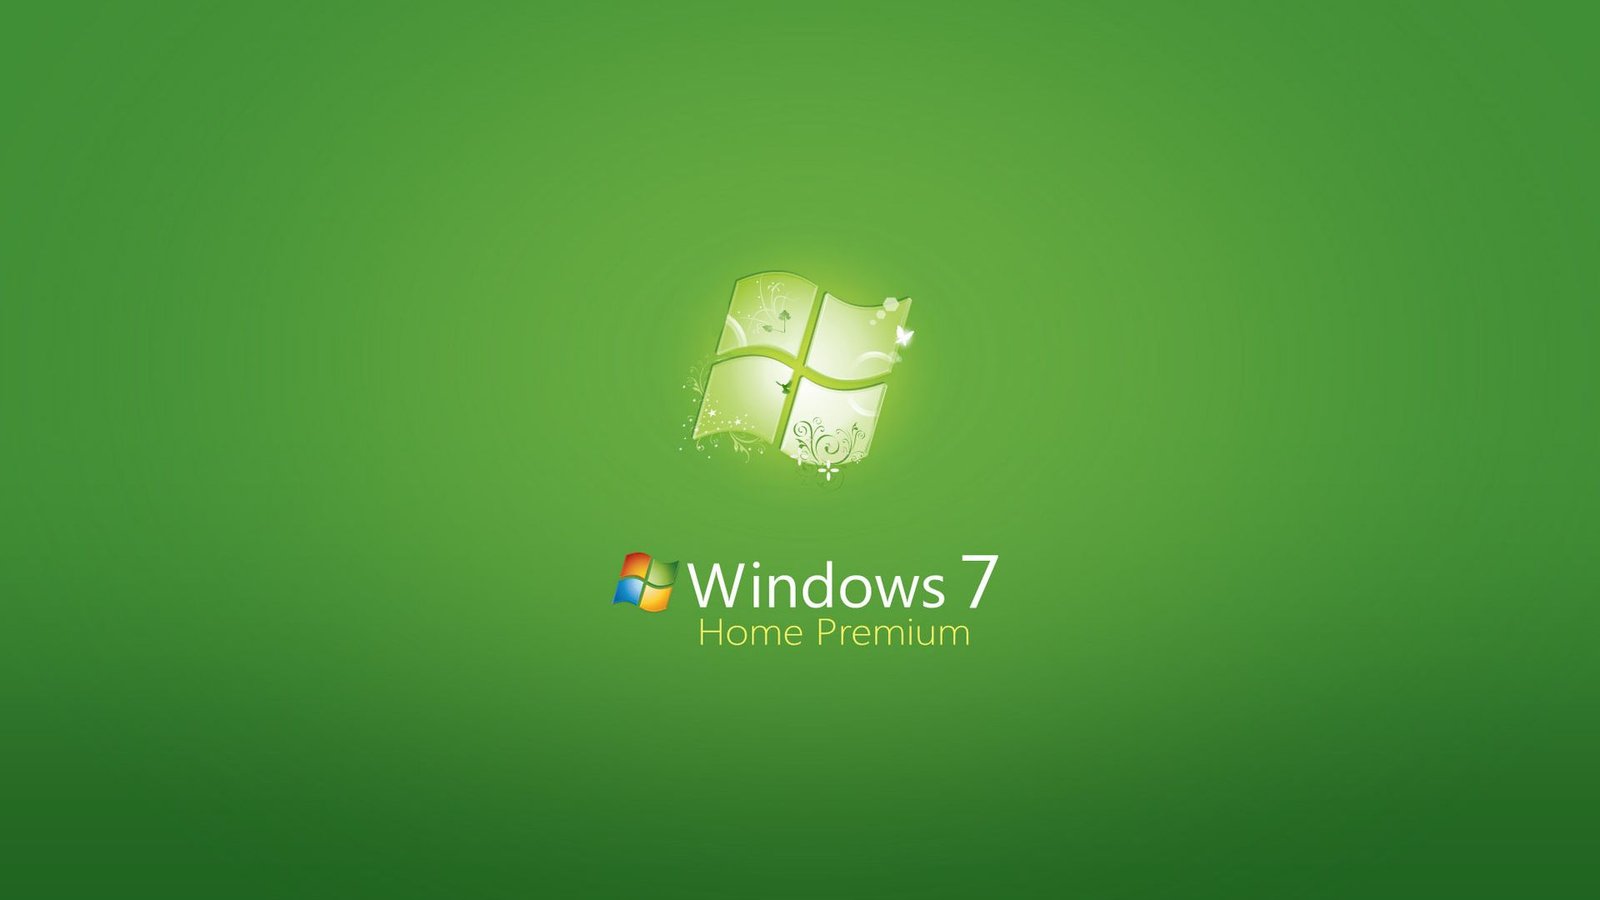 Introduction to Windows 7 Home Premium